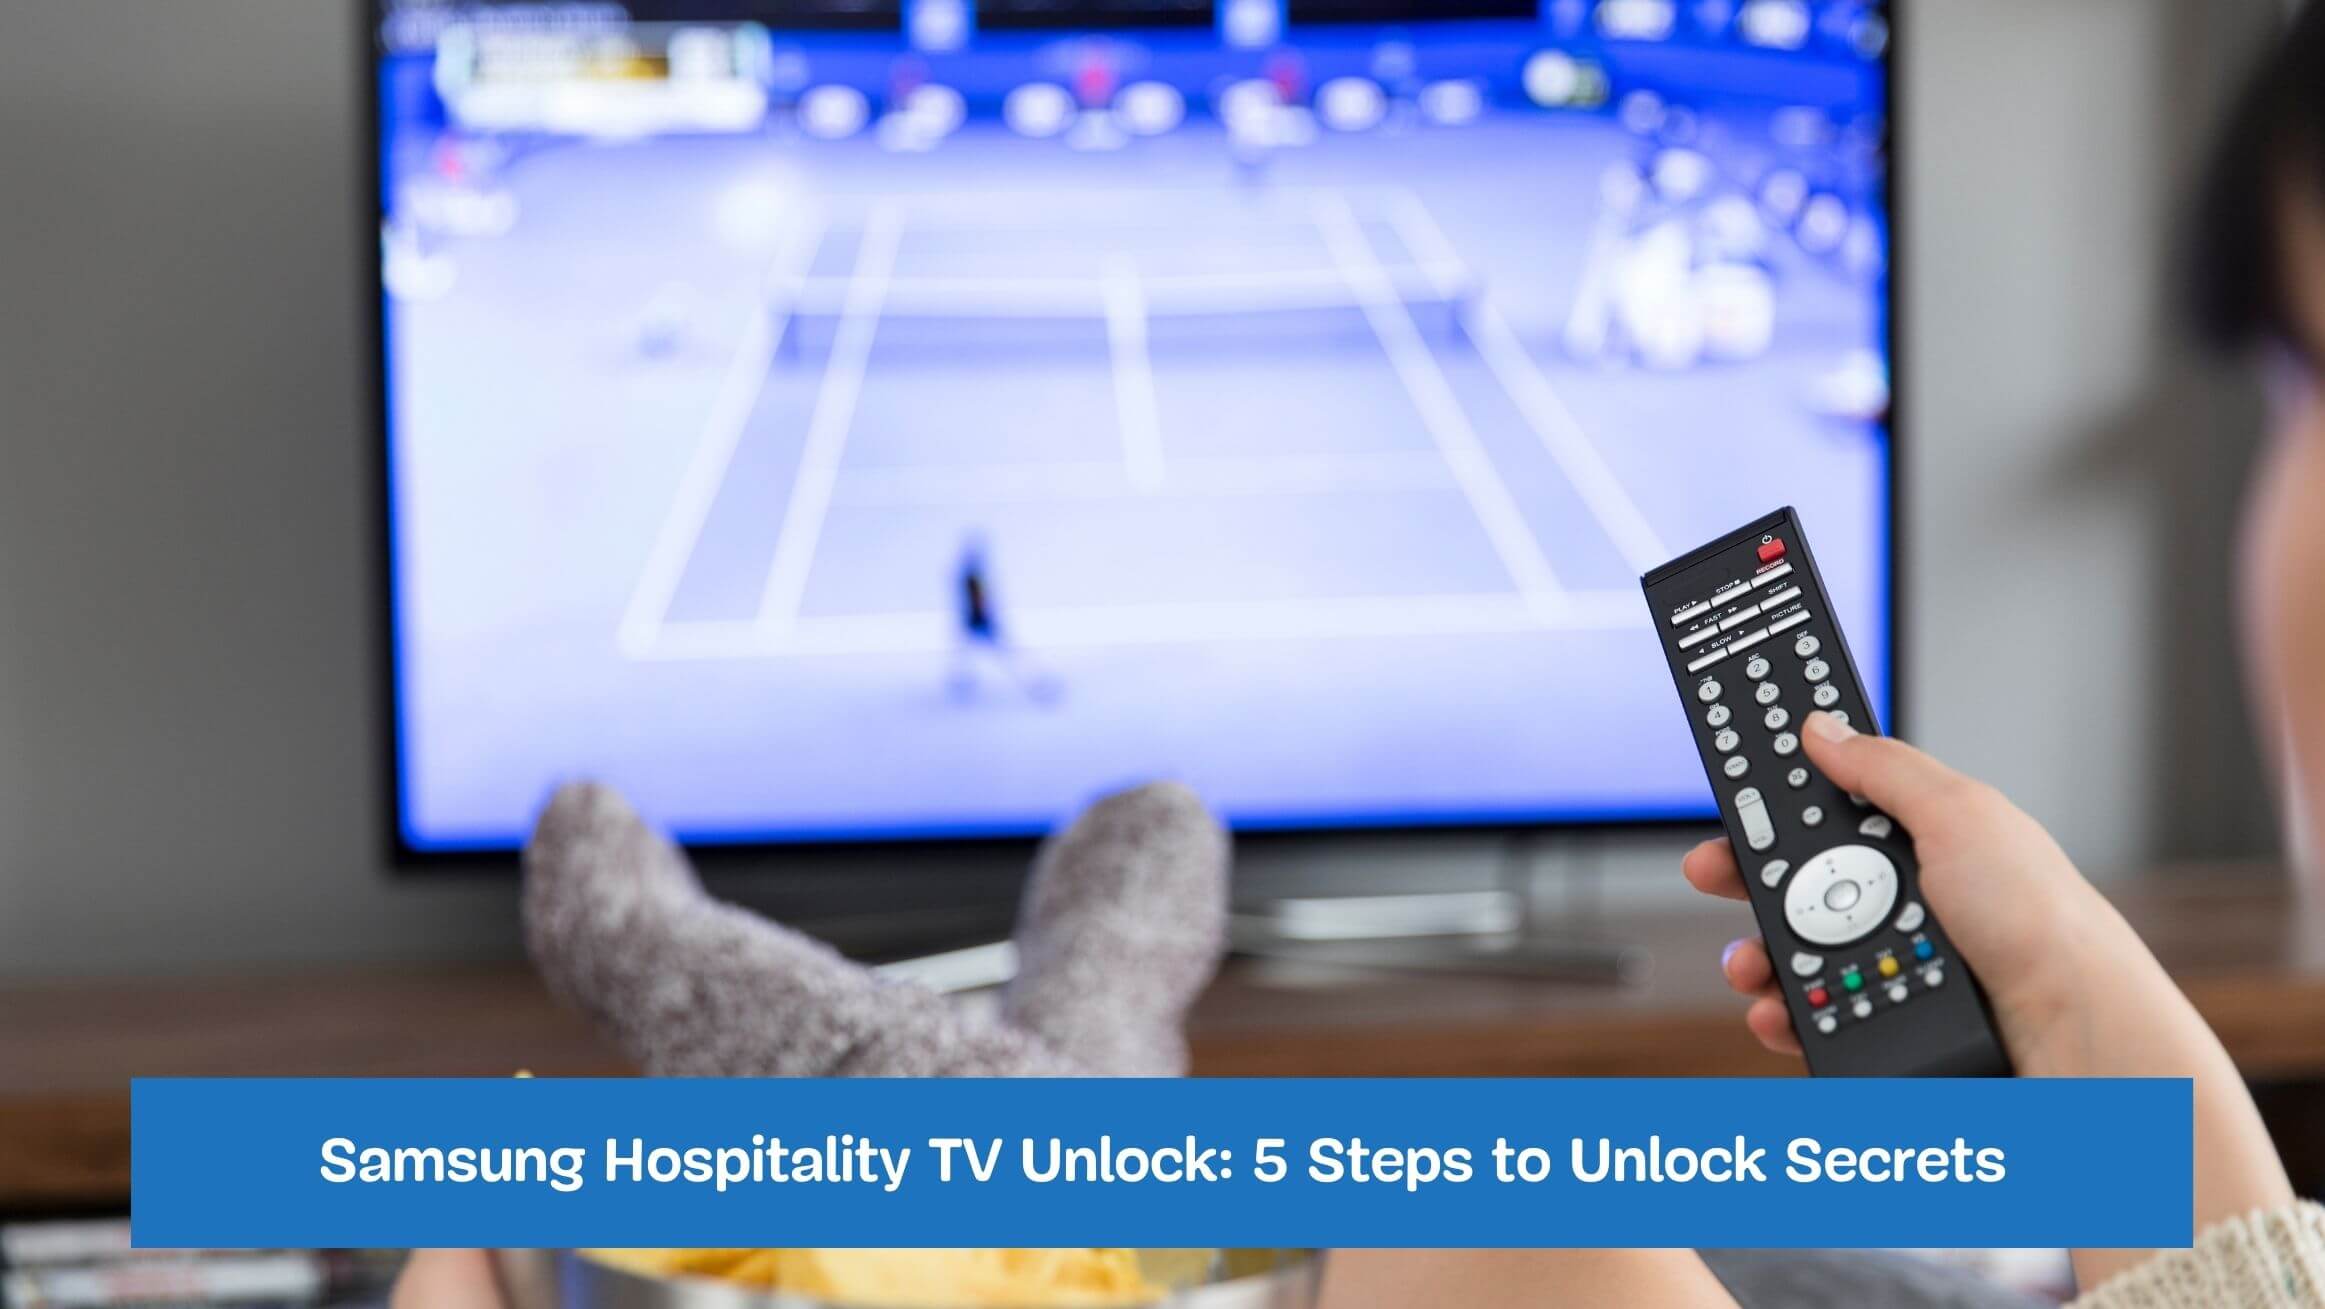 Samsung Hospitality TV Unlock: 5 Steps to Unlock Secrets